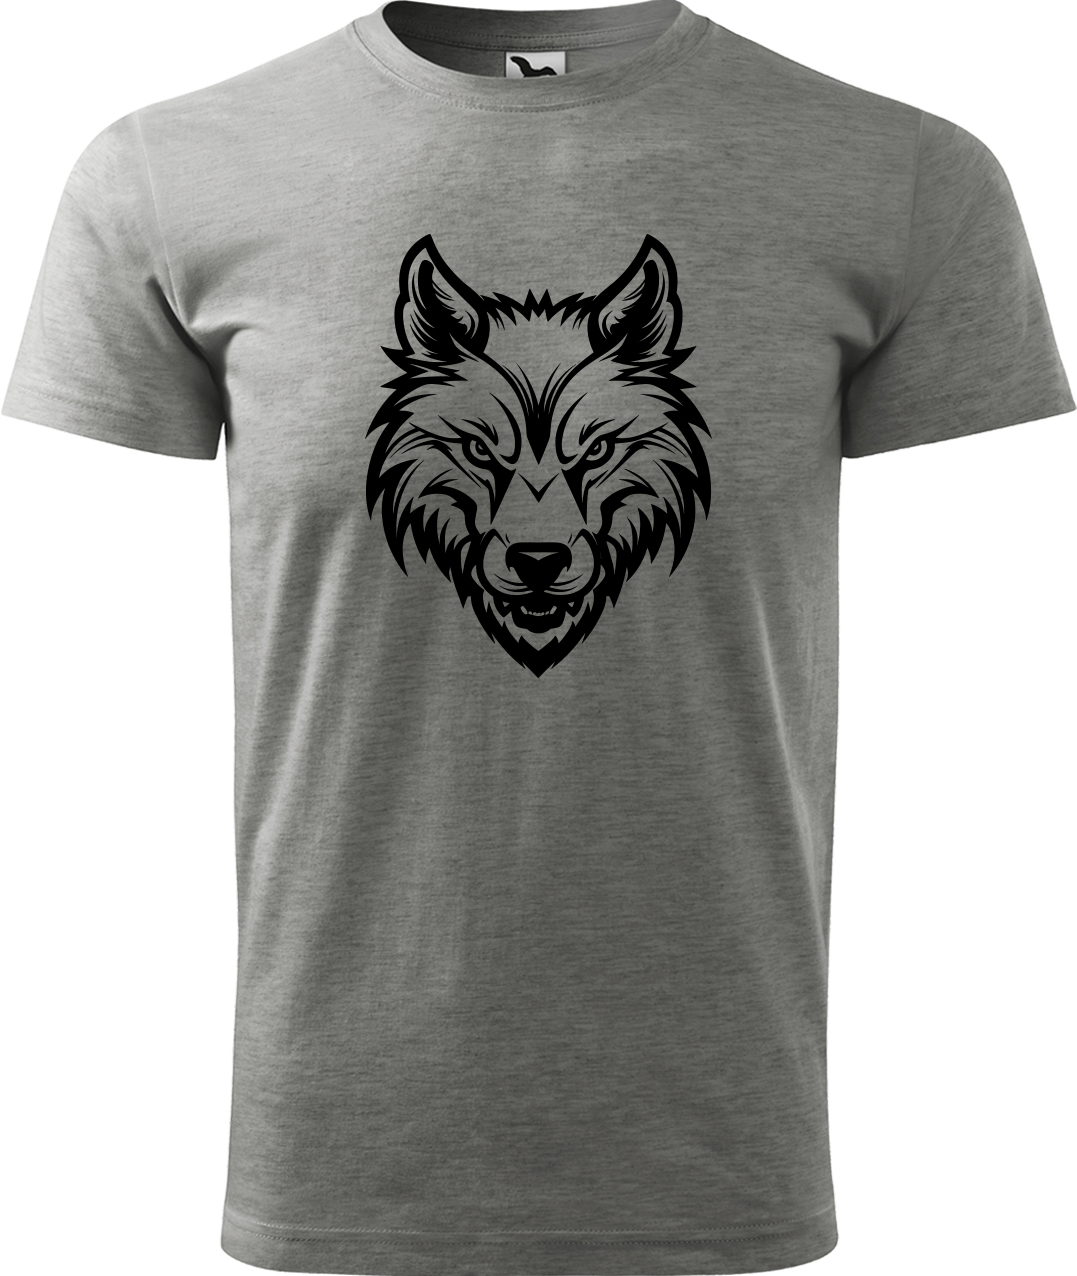 Pánské tričko s vlkem - Alfa samec Velikost: 2XL, Barva: Tmavě šedý melír (12), Střih: pánský